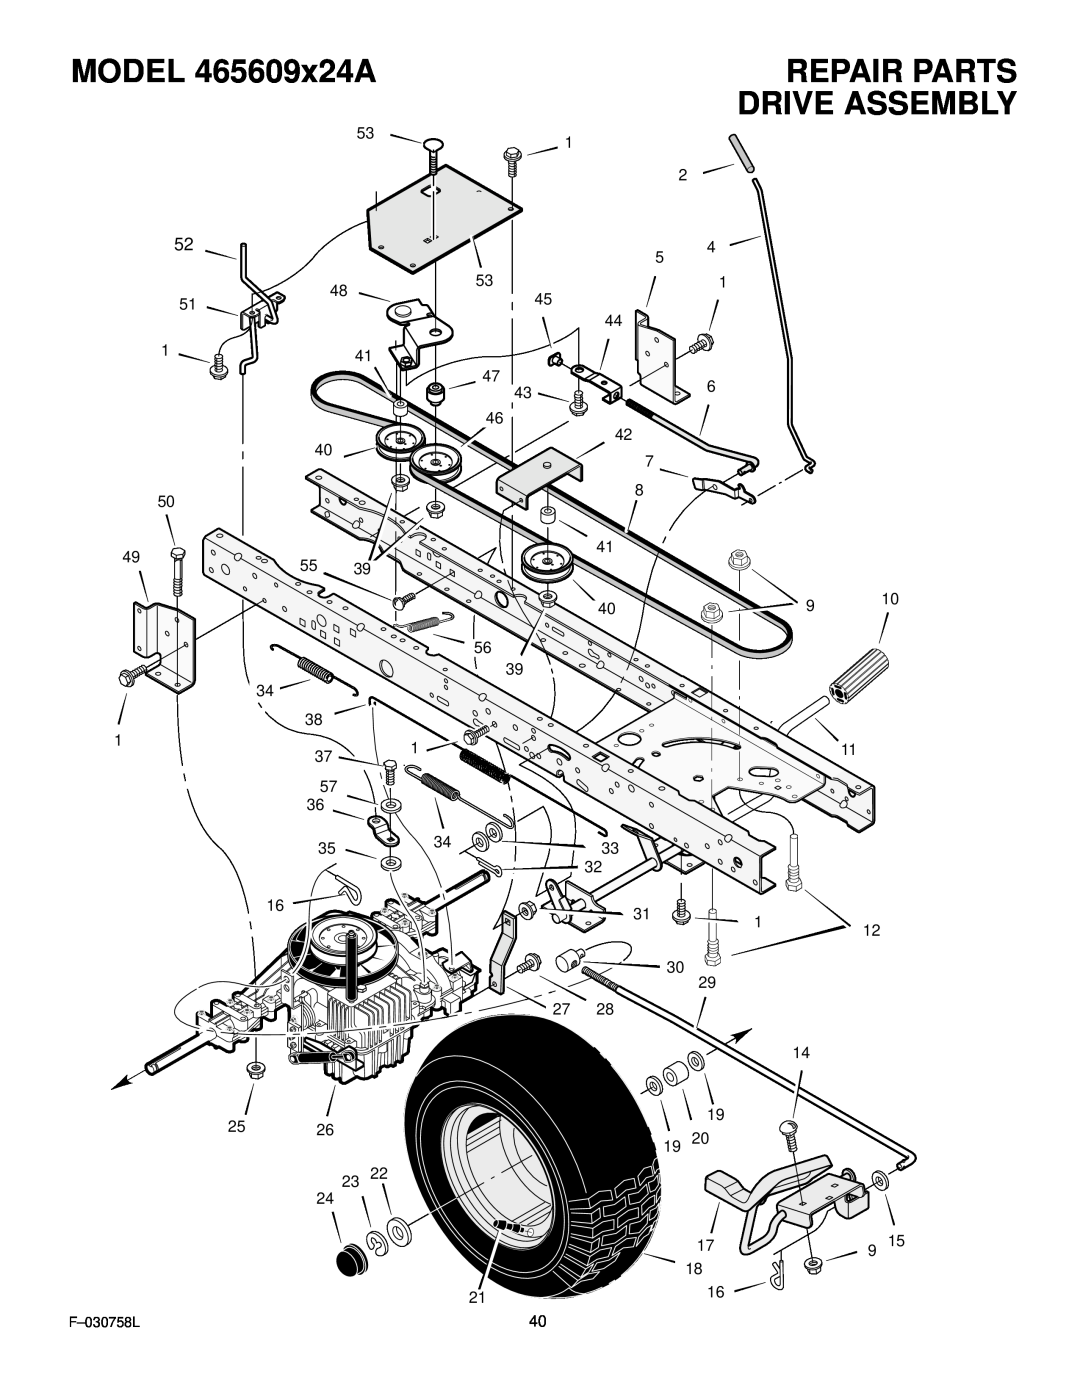 Murray manual Drive Assembly, MODEL 465609x24A, Repair Parts 